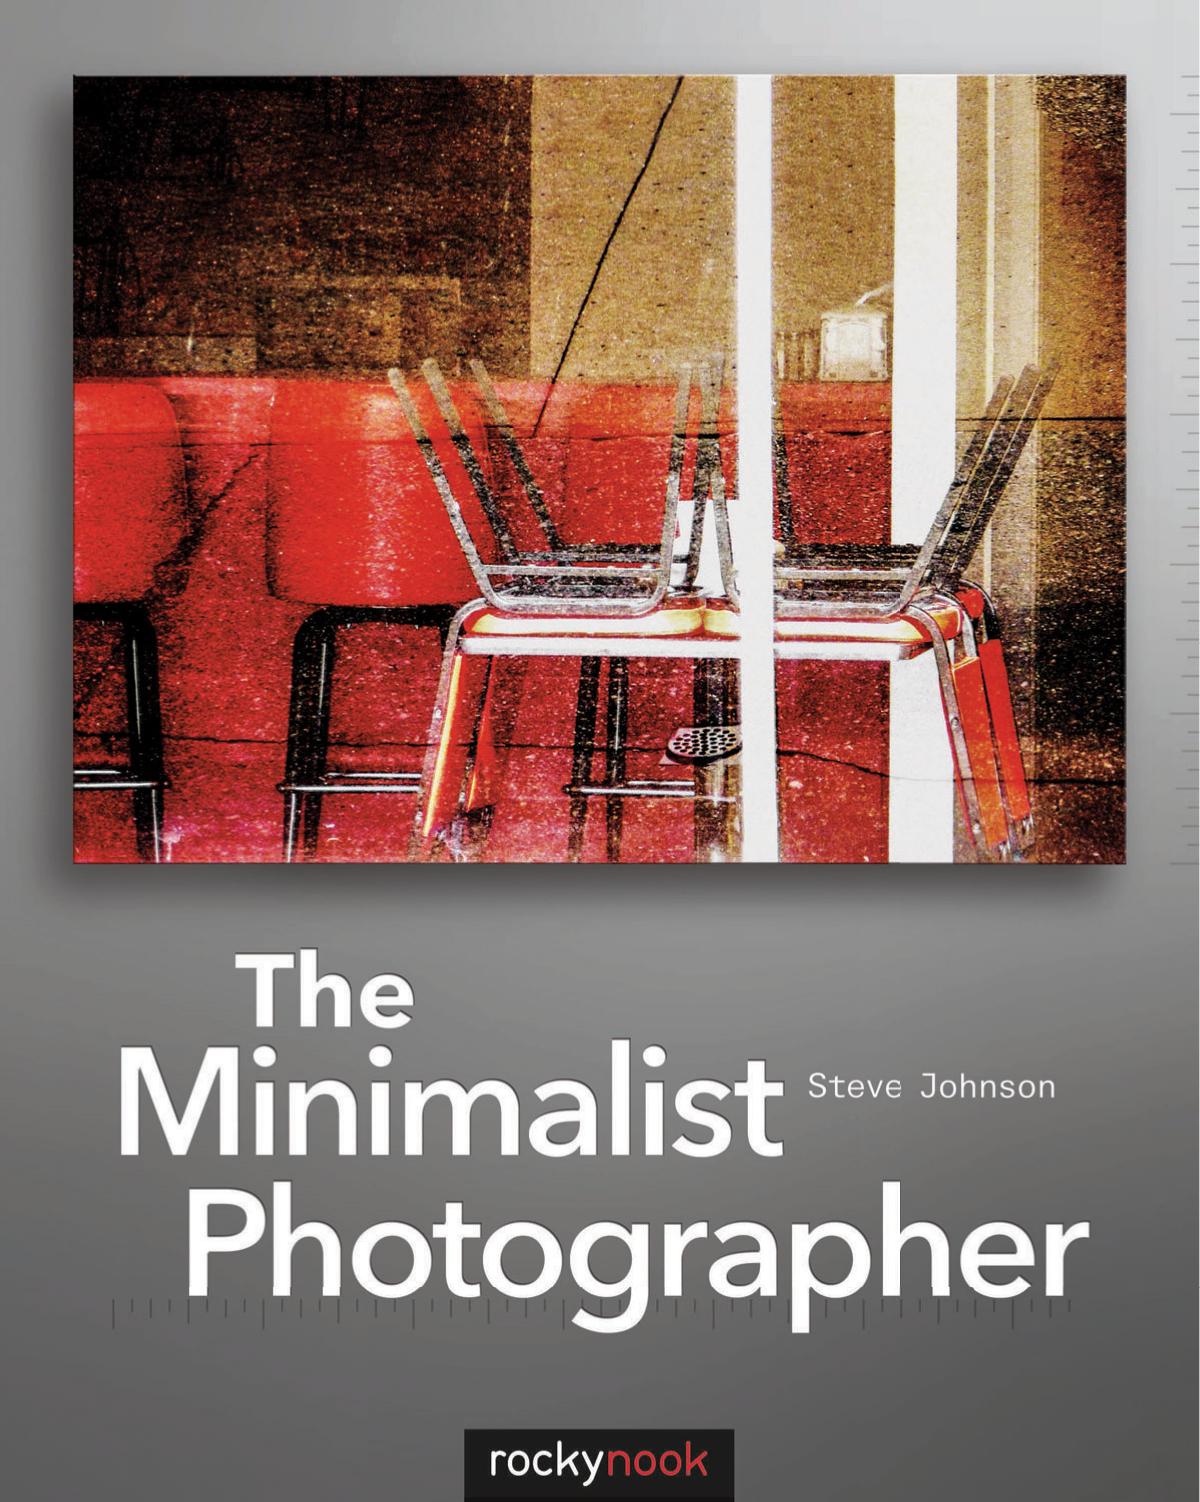 The Minimalist Photographer by Steve Johnson